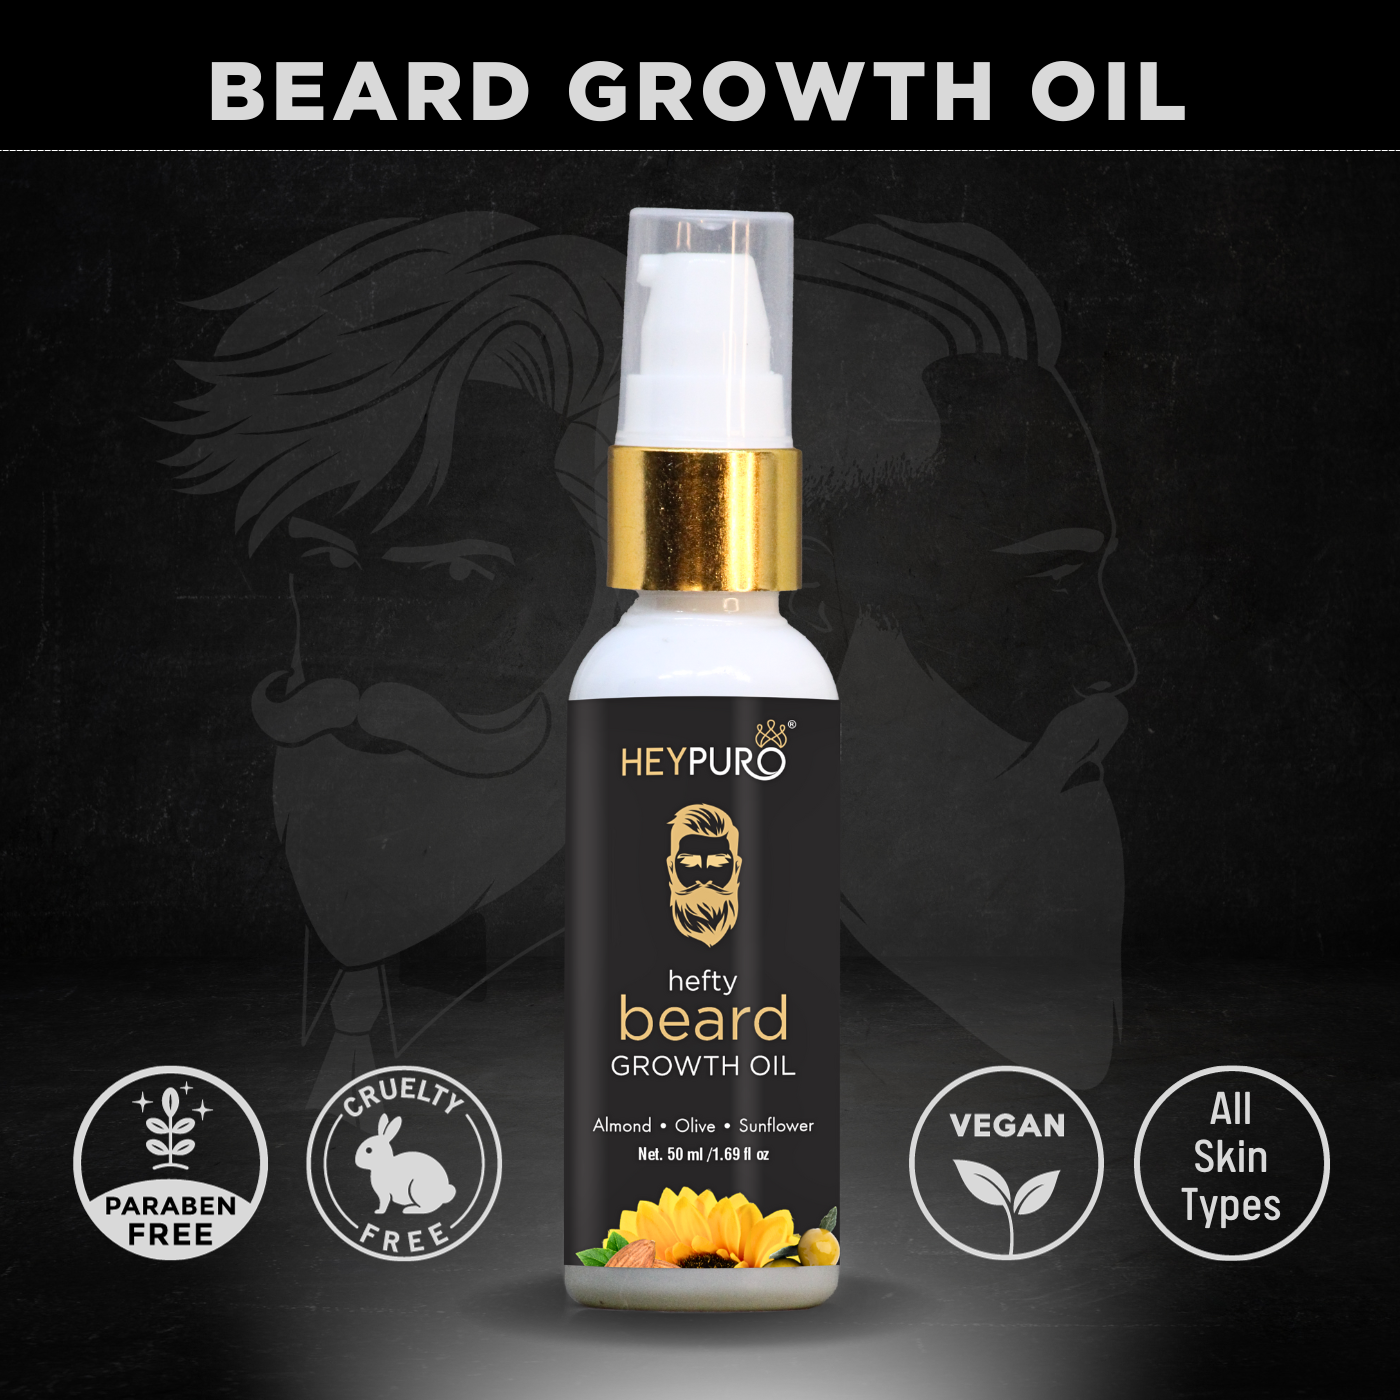 Advanced Beard Growth Oil - Buy 1 Get 1 FREE